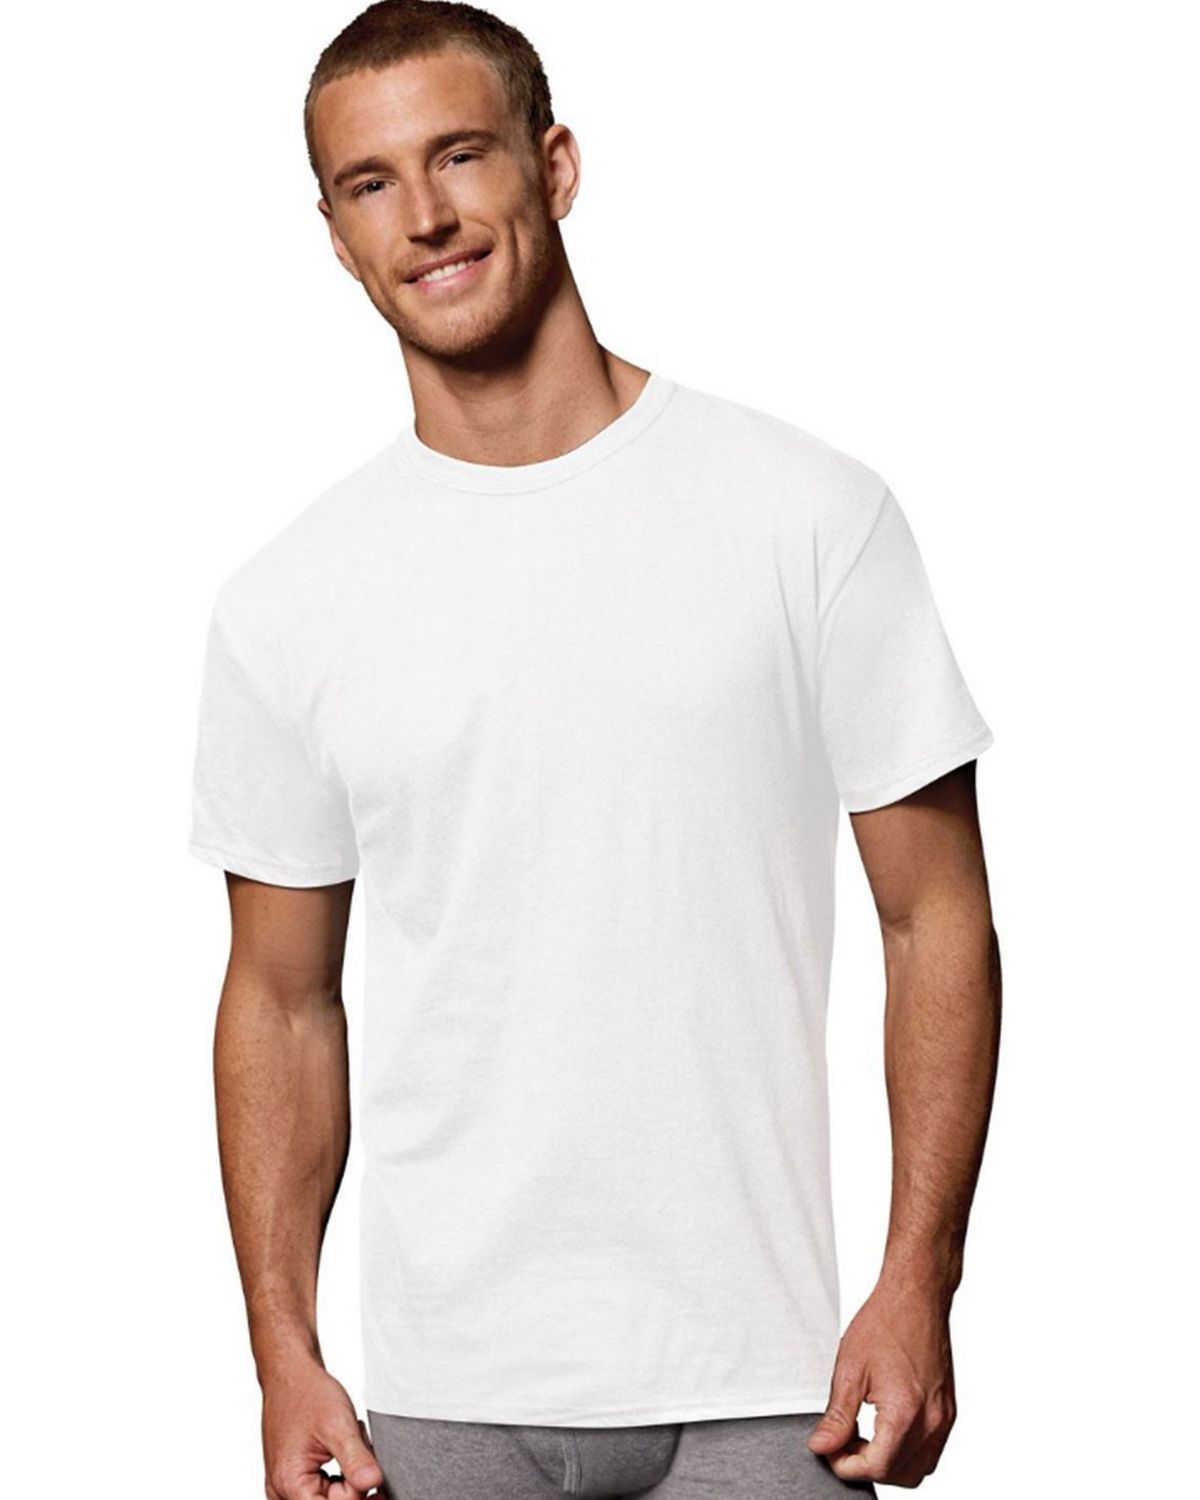 Hanes 2135M1 Mens Fresh IQ Cotton/Modal Crew Neck T-Shirt P1